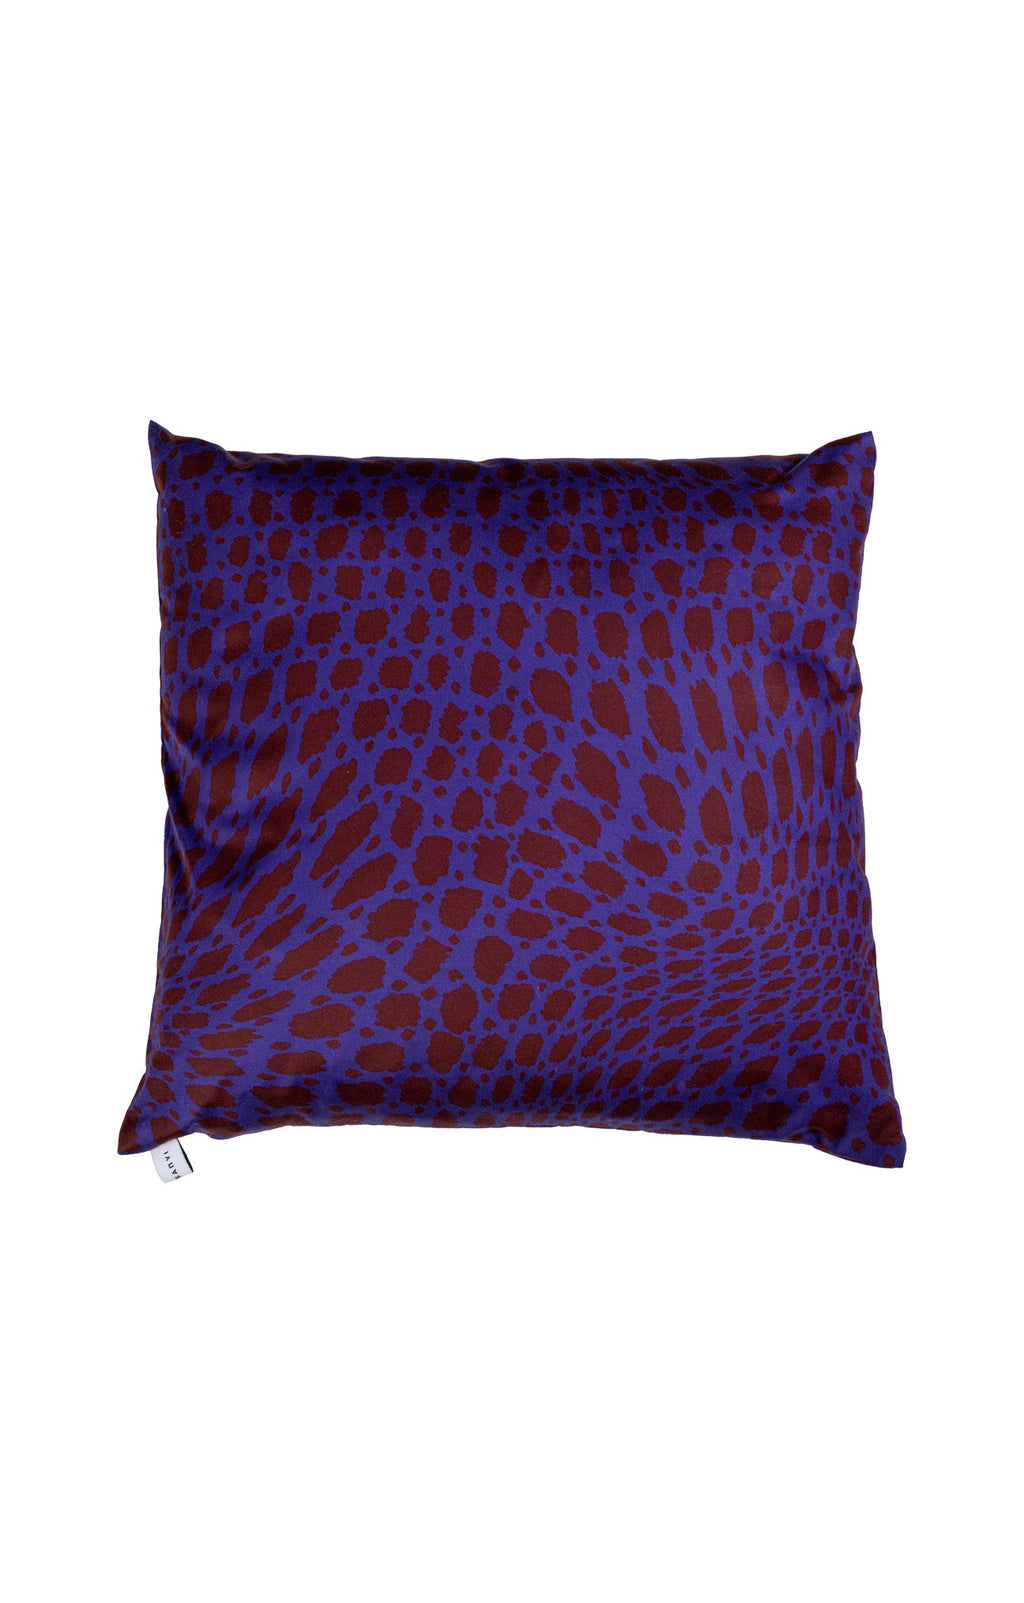 FREE GIFT Decorative cushion 'warp polka dot' print